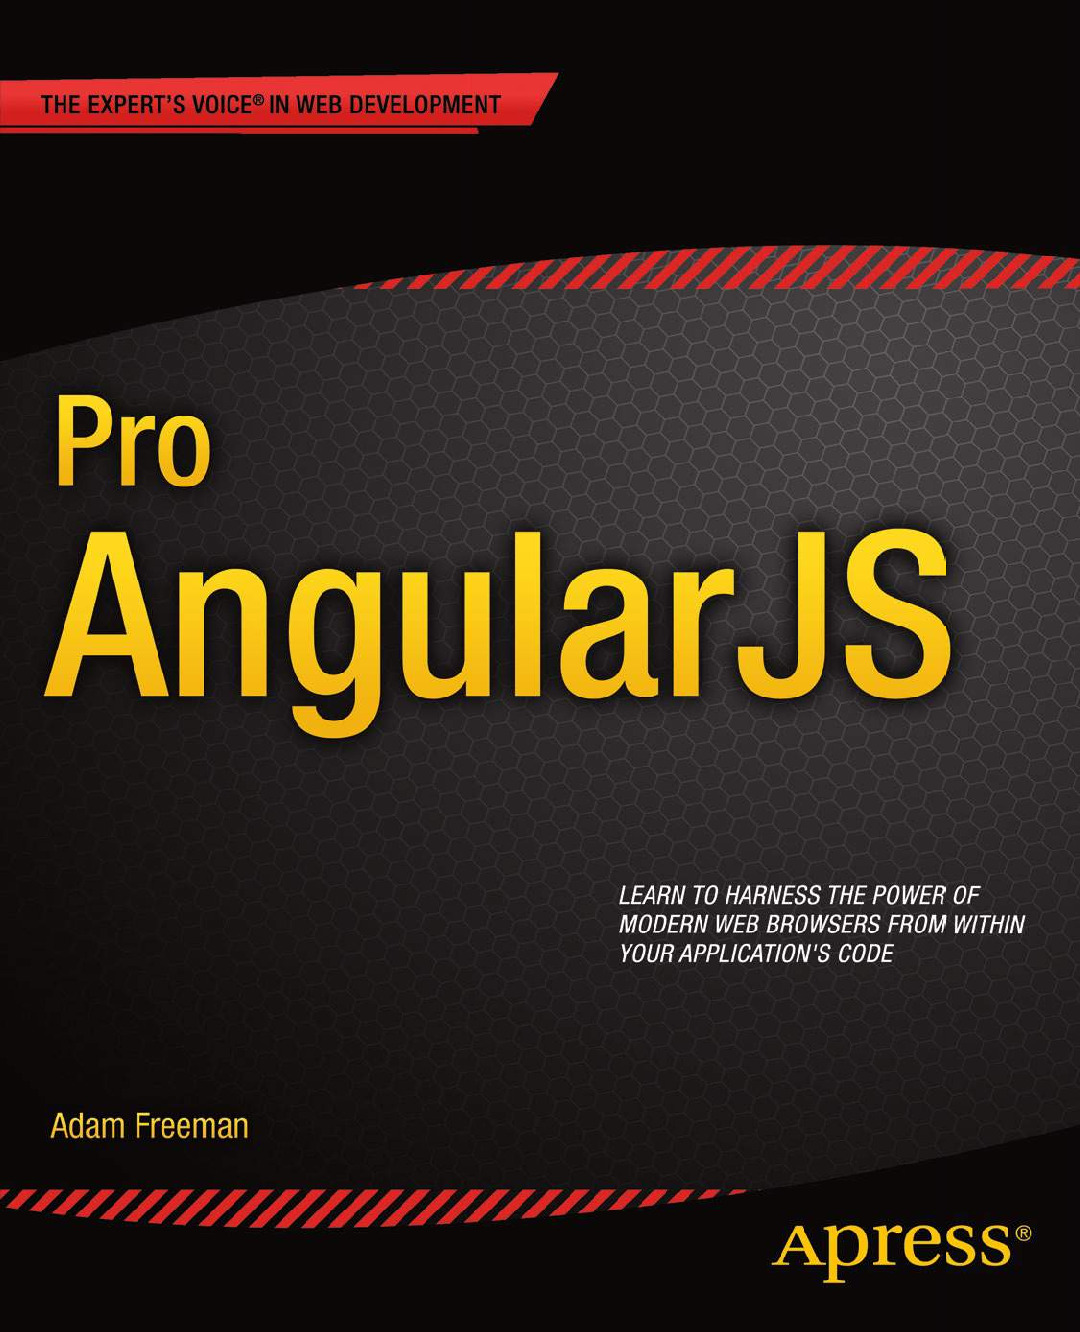 Pro AngularJS by A. Freeman – Mar 2015